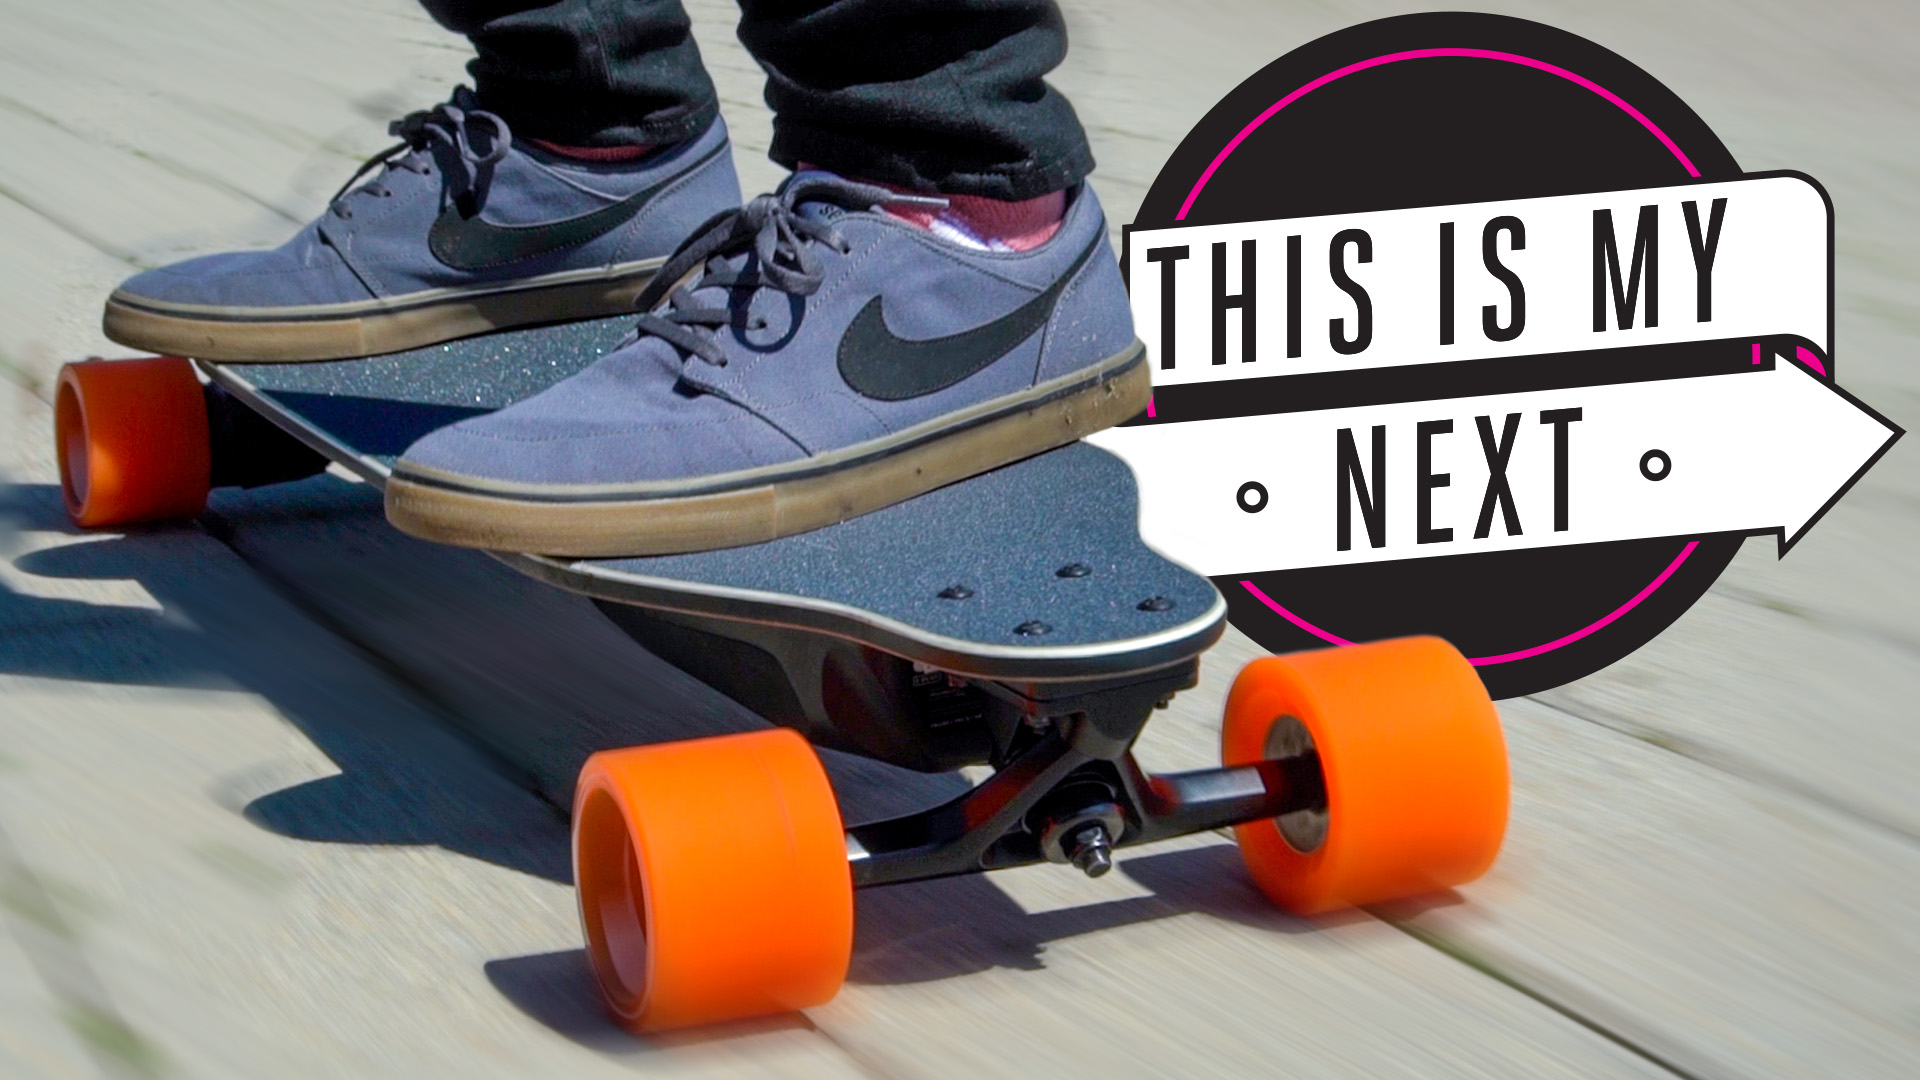 inkt voor de hand liggend Labe The best electric skateboards of 2018 - The Verge